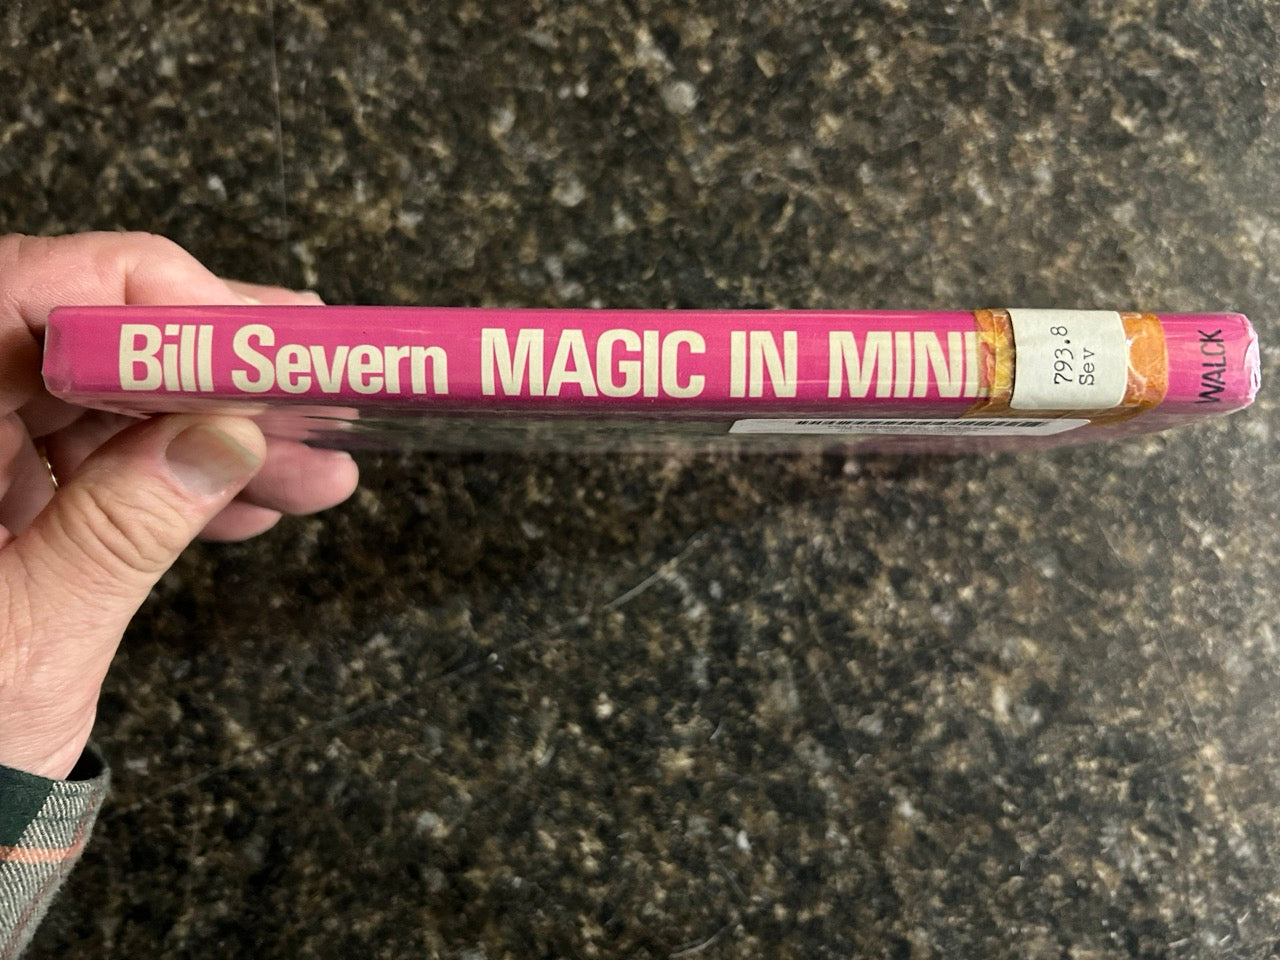 Bill Severn's Magic in Mind